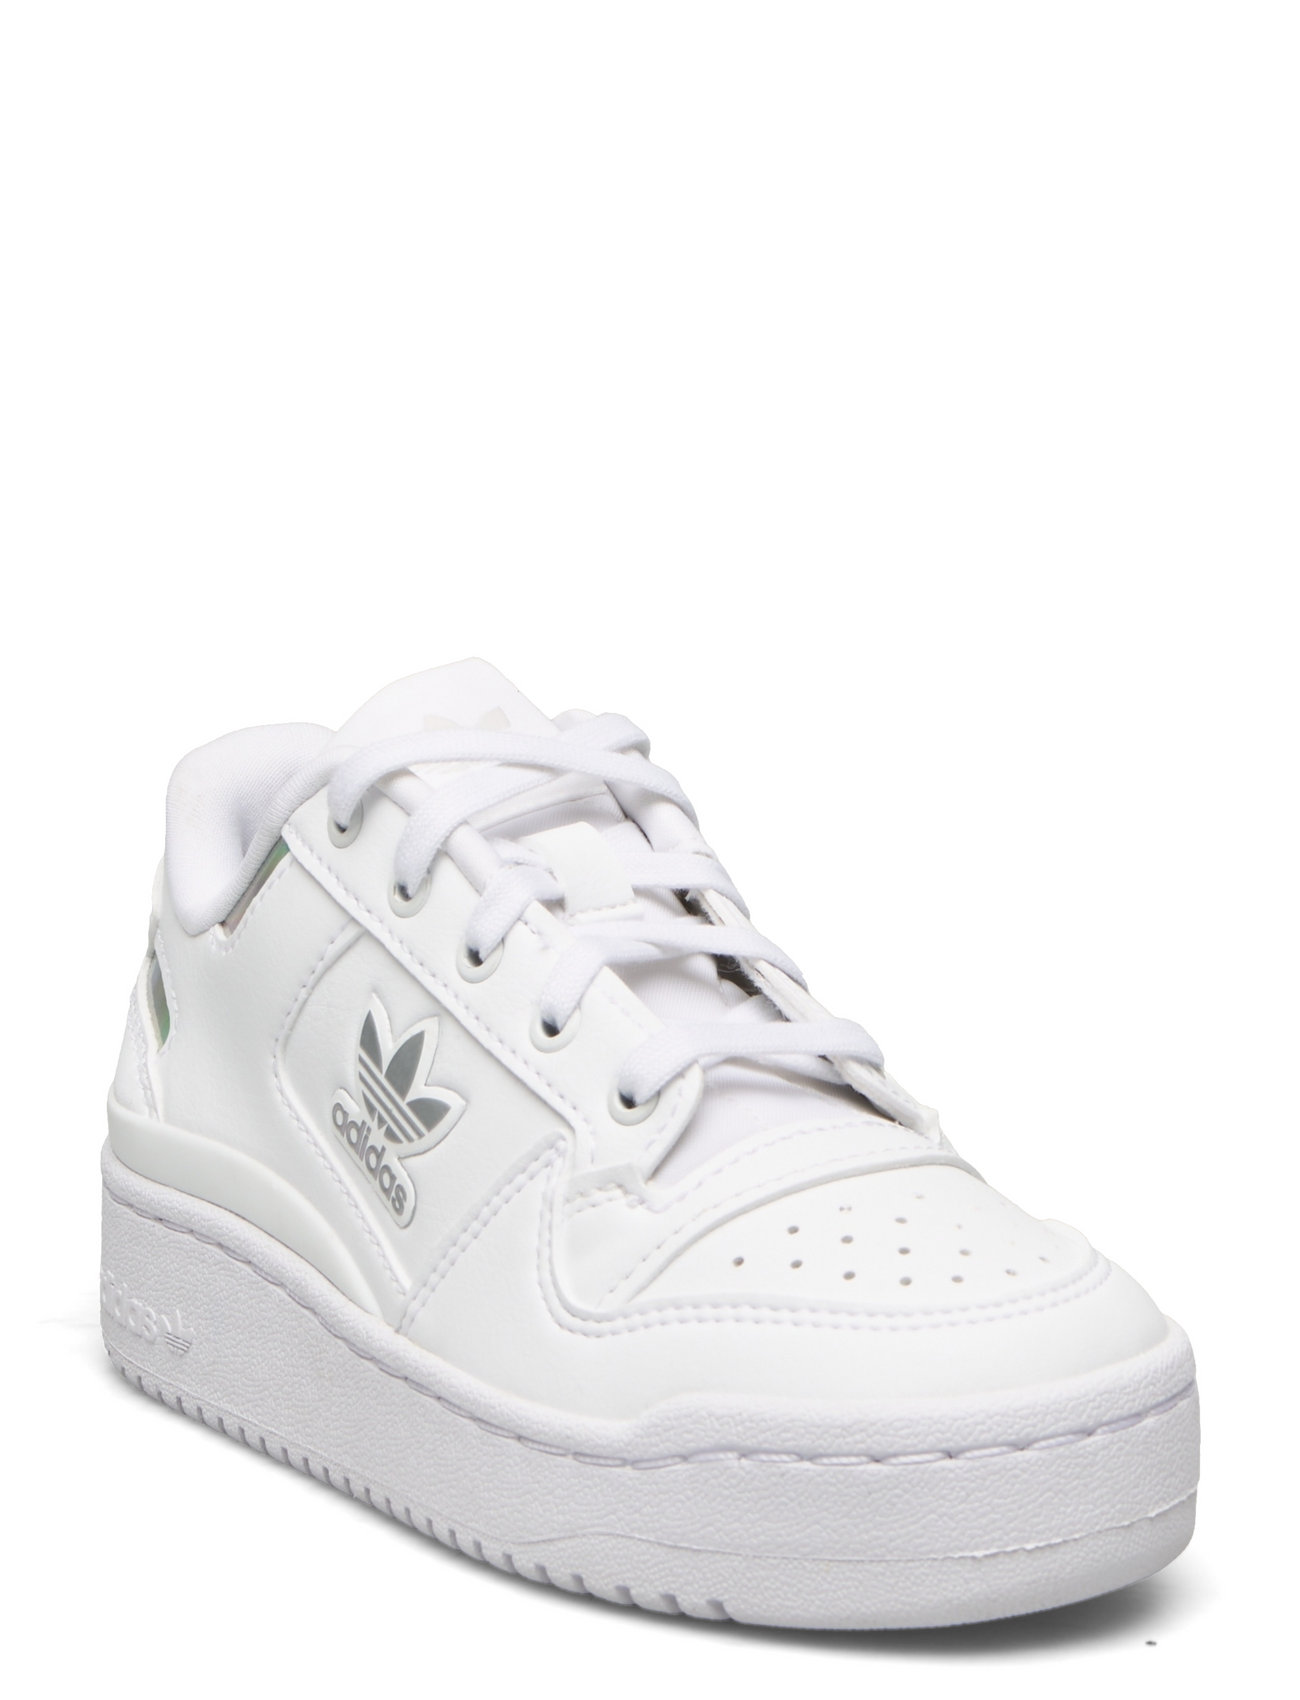 "adidas Originals" "Forum Bold C Sport Sneakers Low-top White Adidas